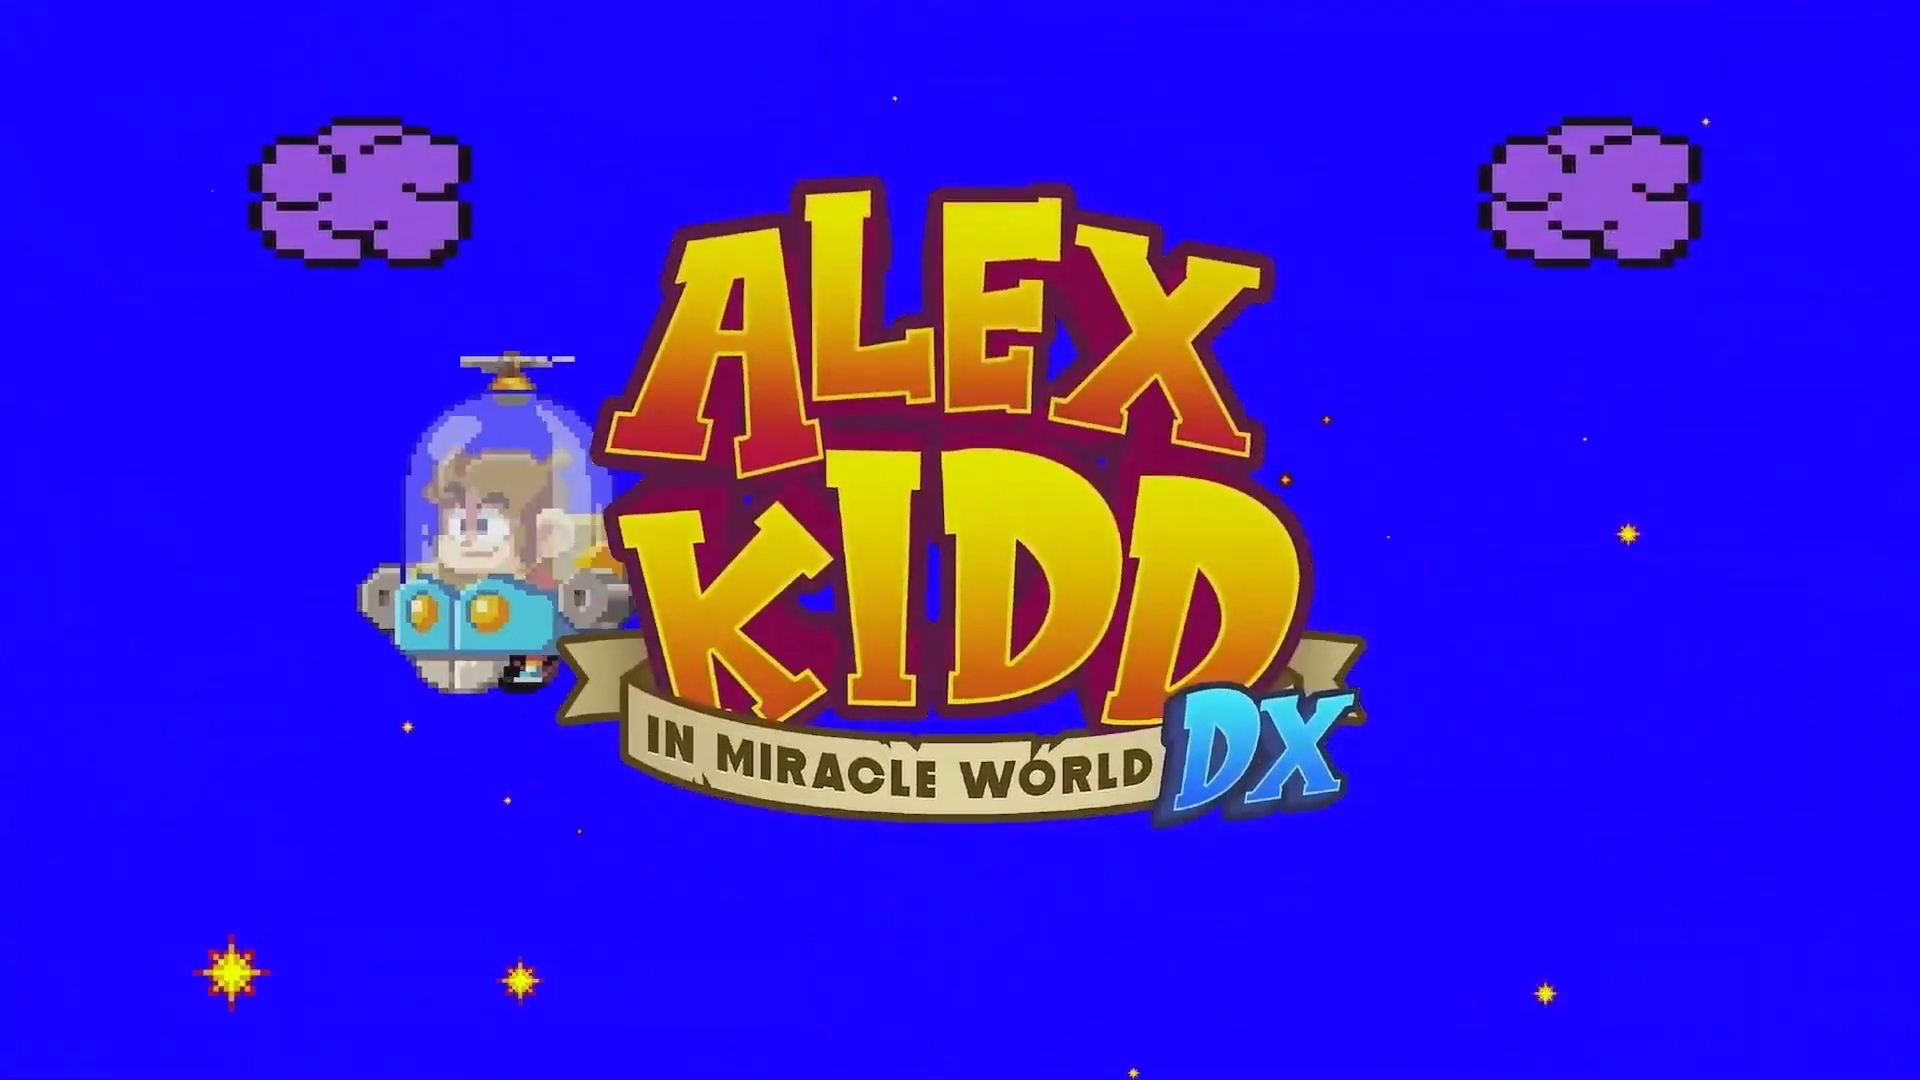 Análise | Alex Kidd in Miracle World DX: Um jovem e seu reinado